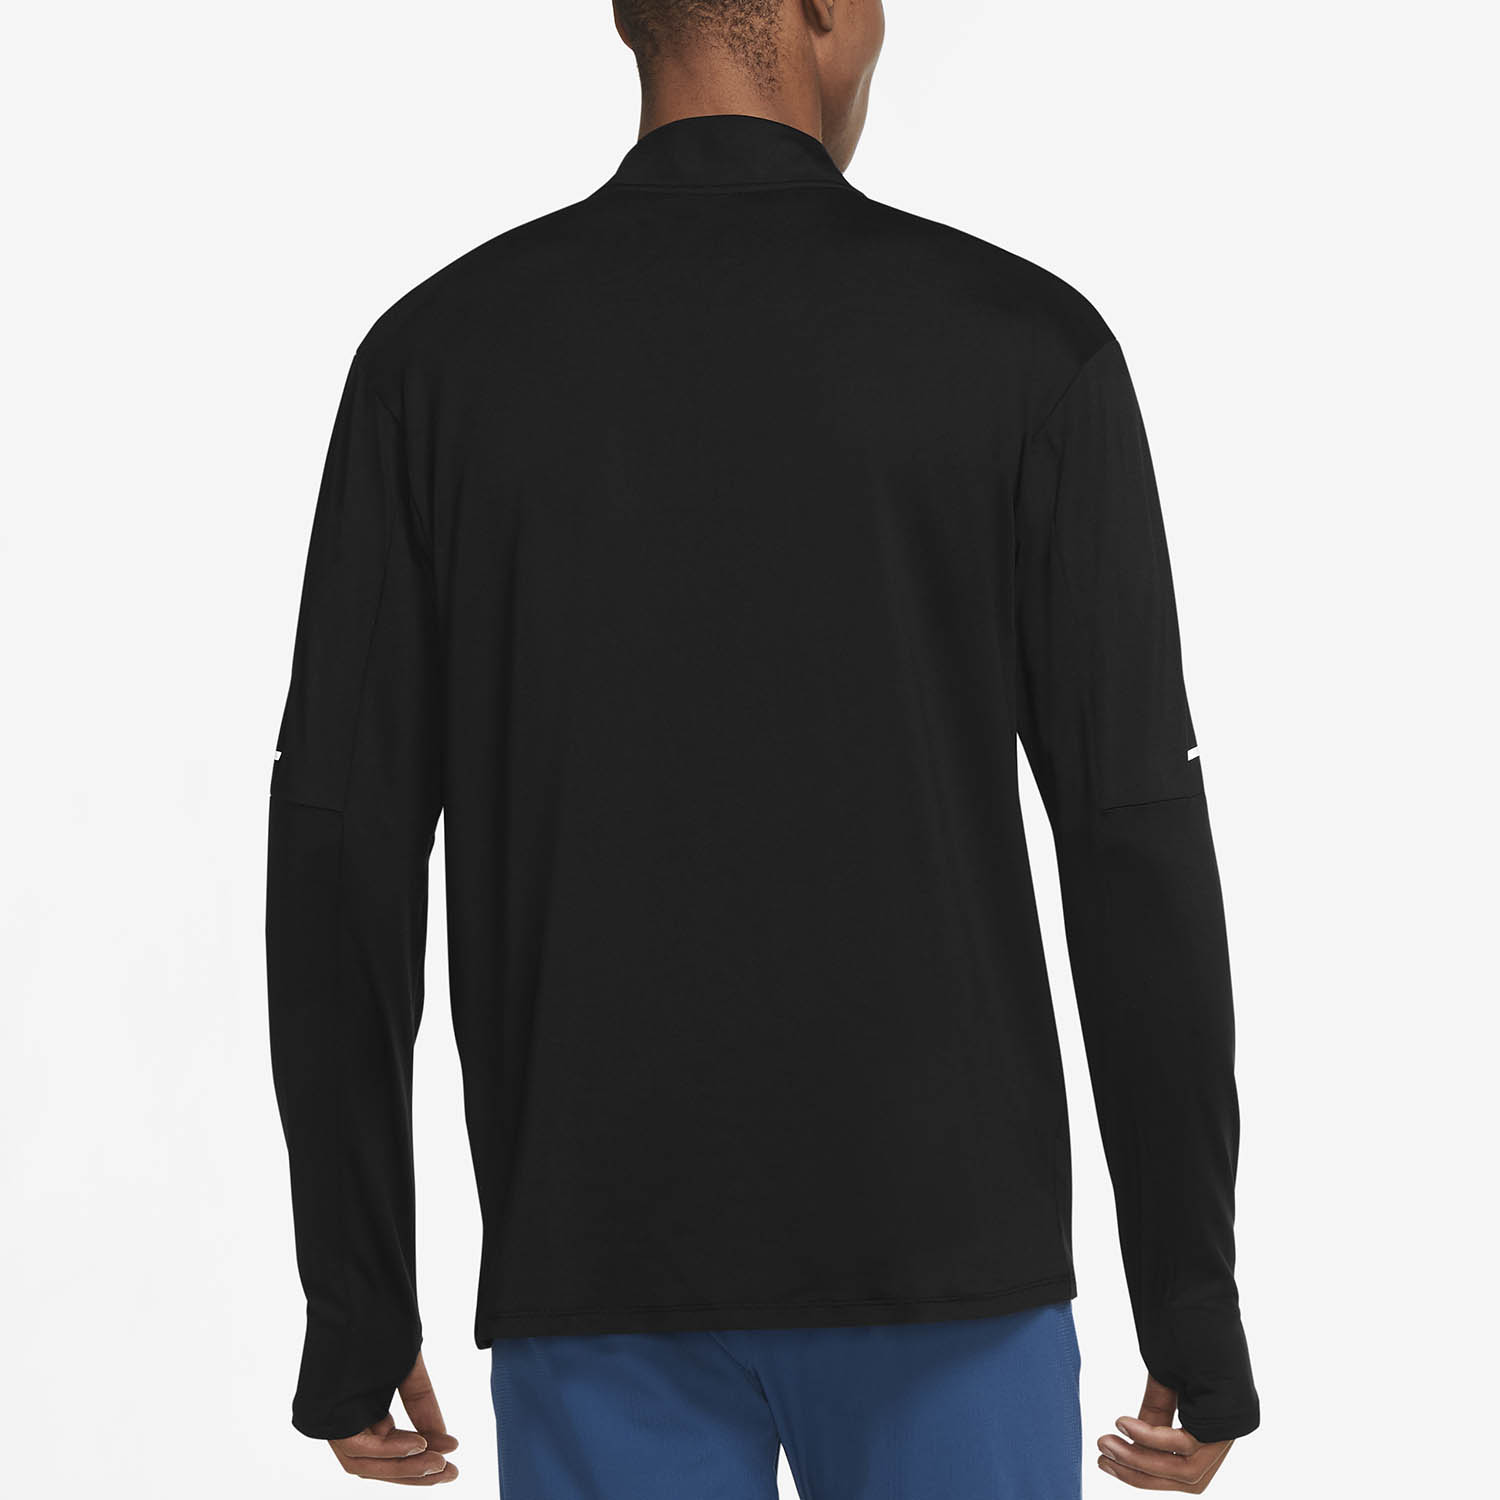 Nike Dri-FIT Element Logo Men's Running Shirt - Black